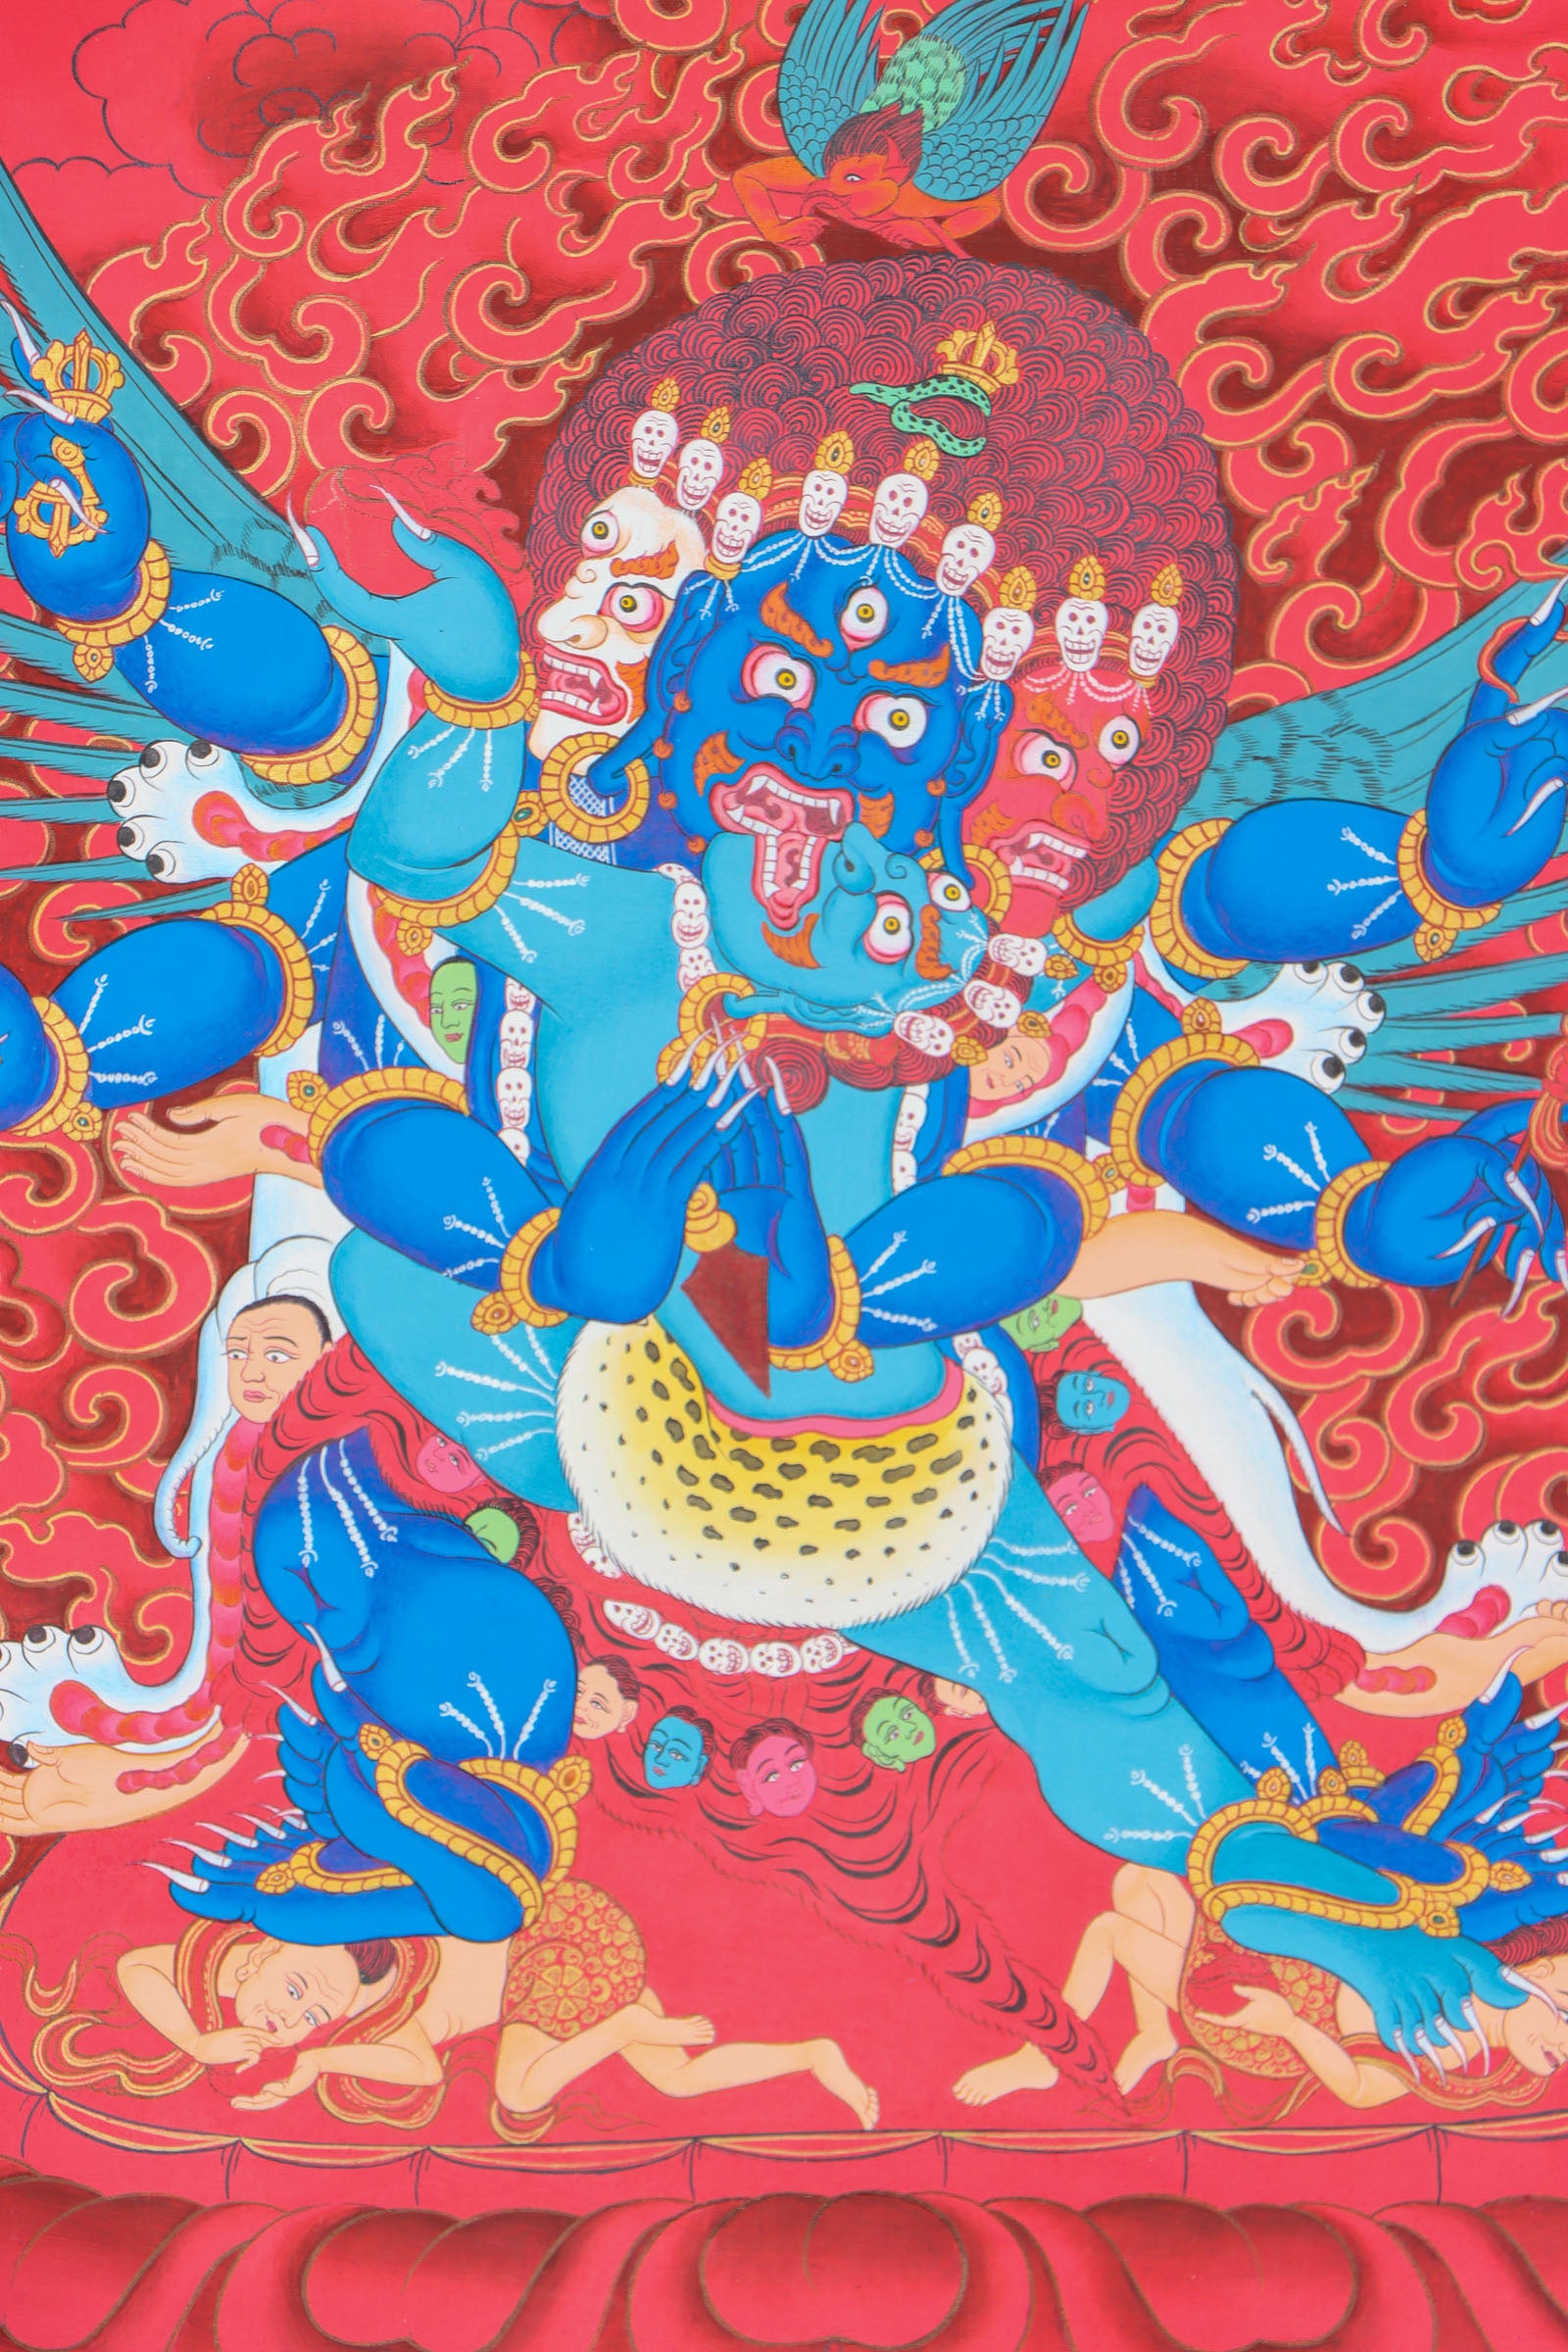 Vajrakilaya Brocade Thangka Painting for devotion, meditation, and ritualistic ceremonies.